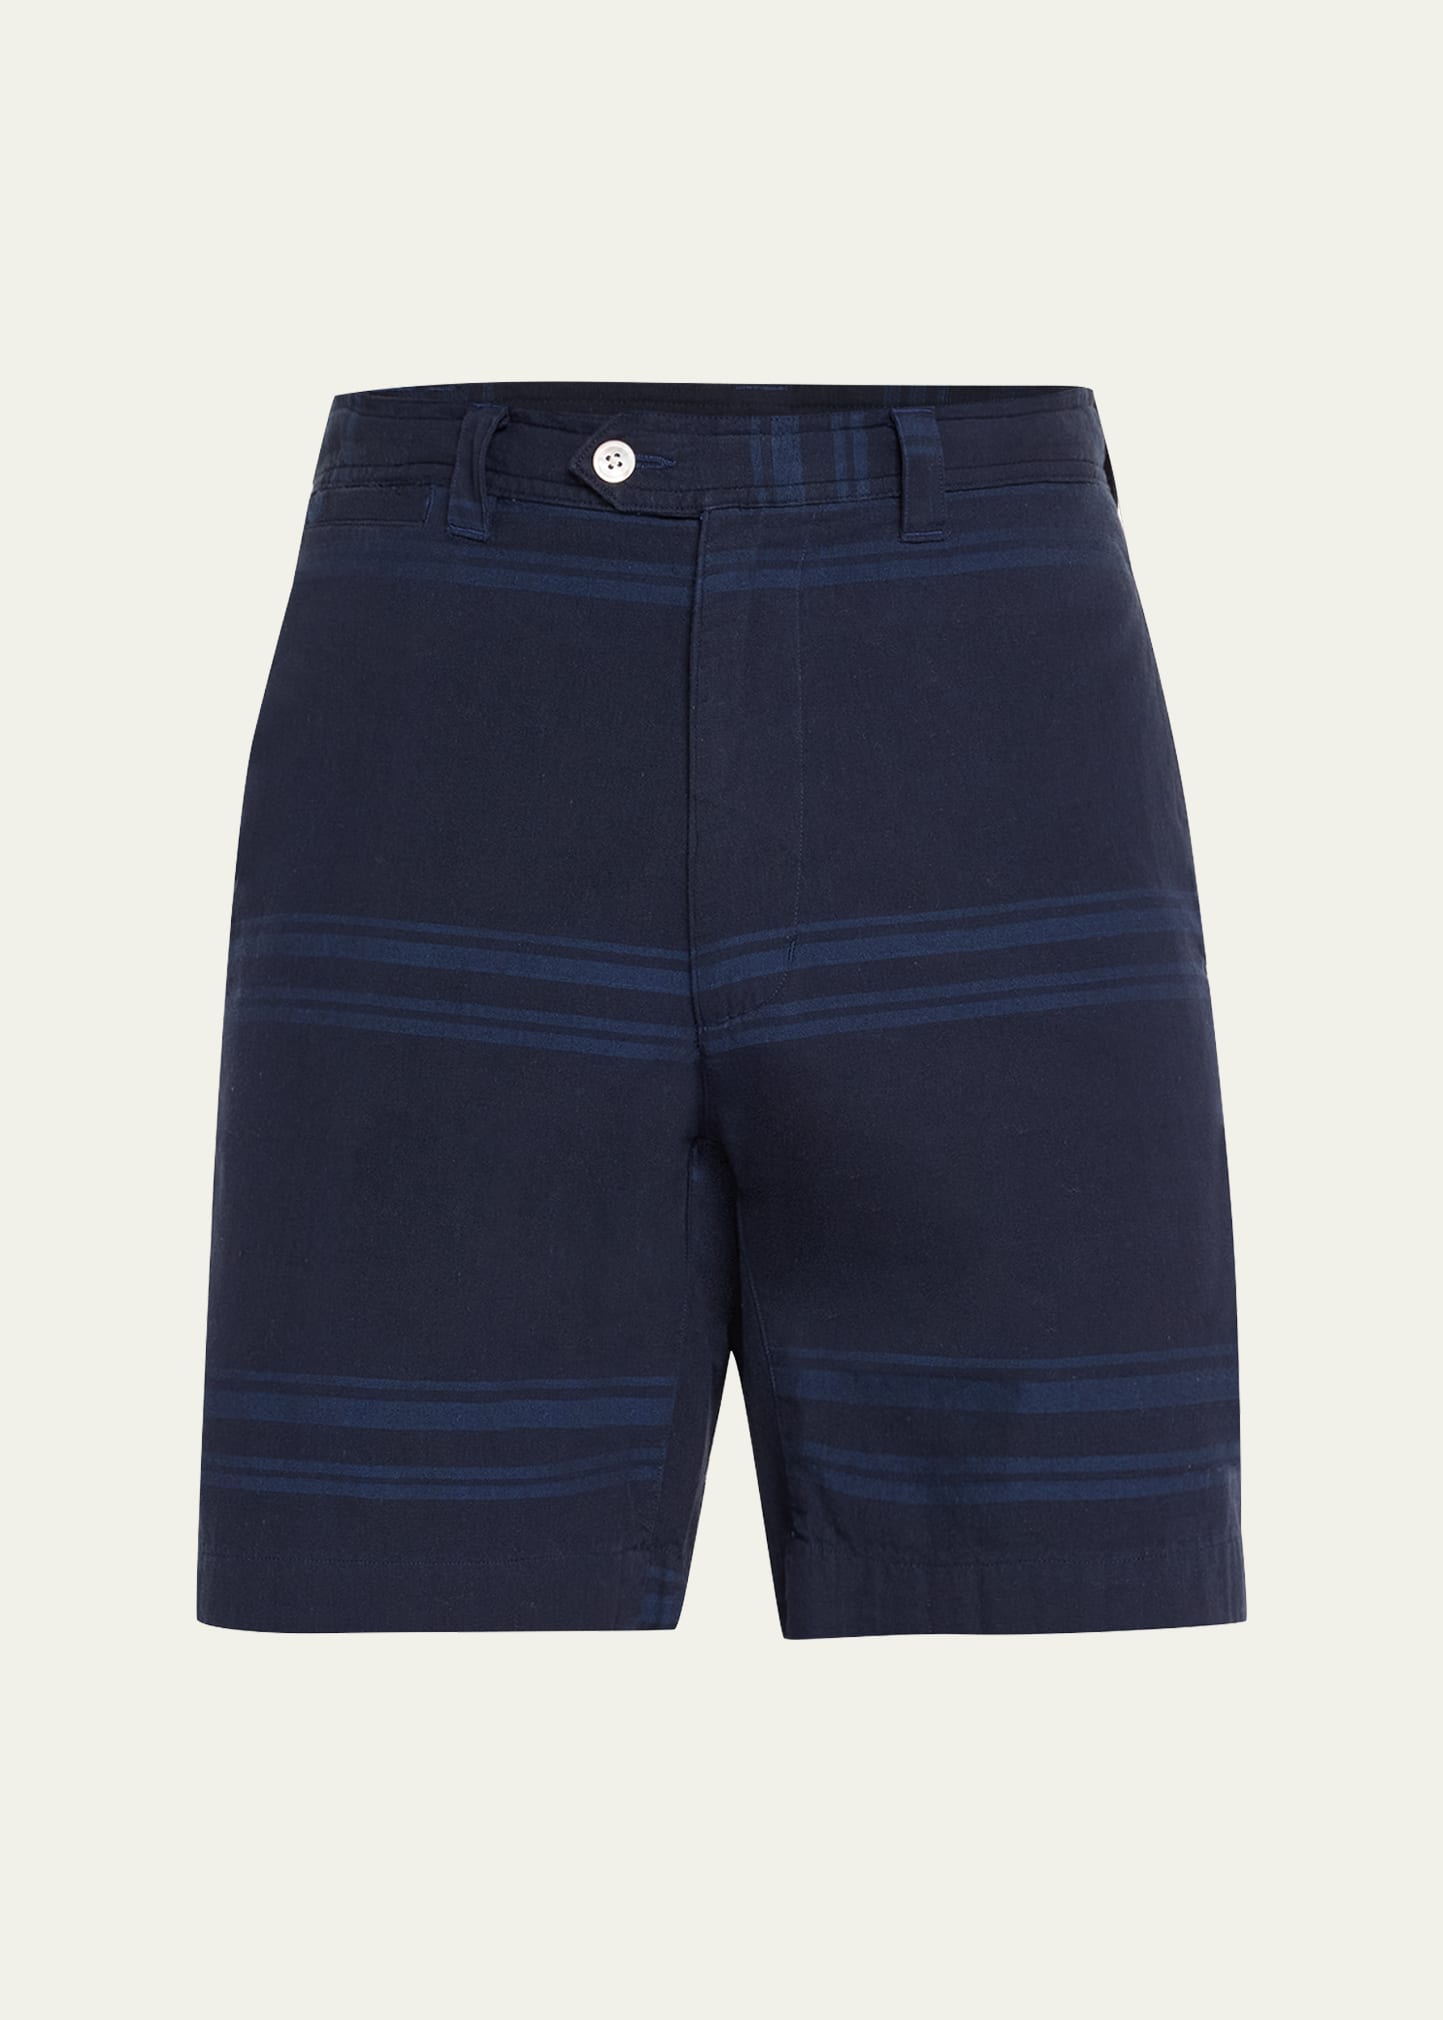 Original Madras Trading Co. Men's Tonal Madras Shorts In Blue